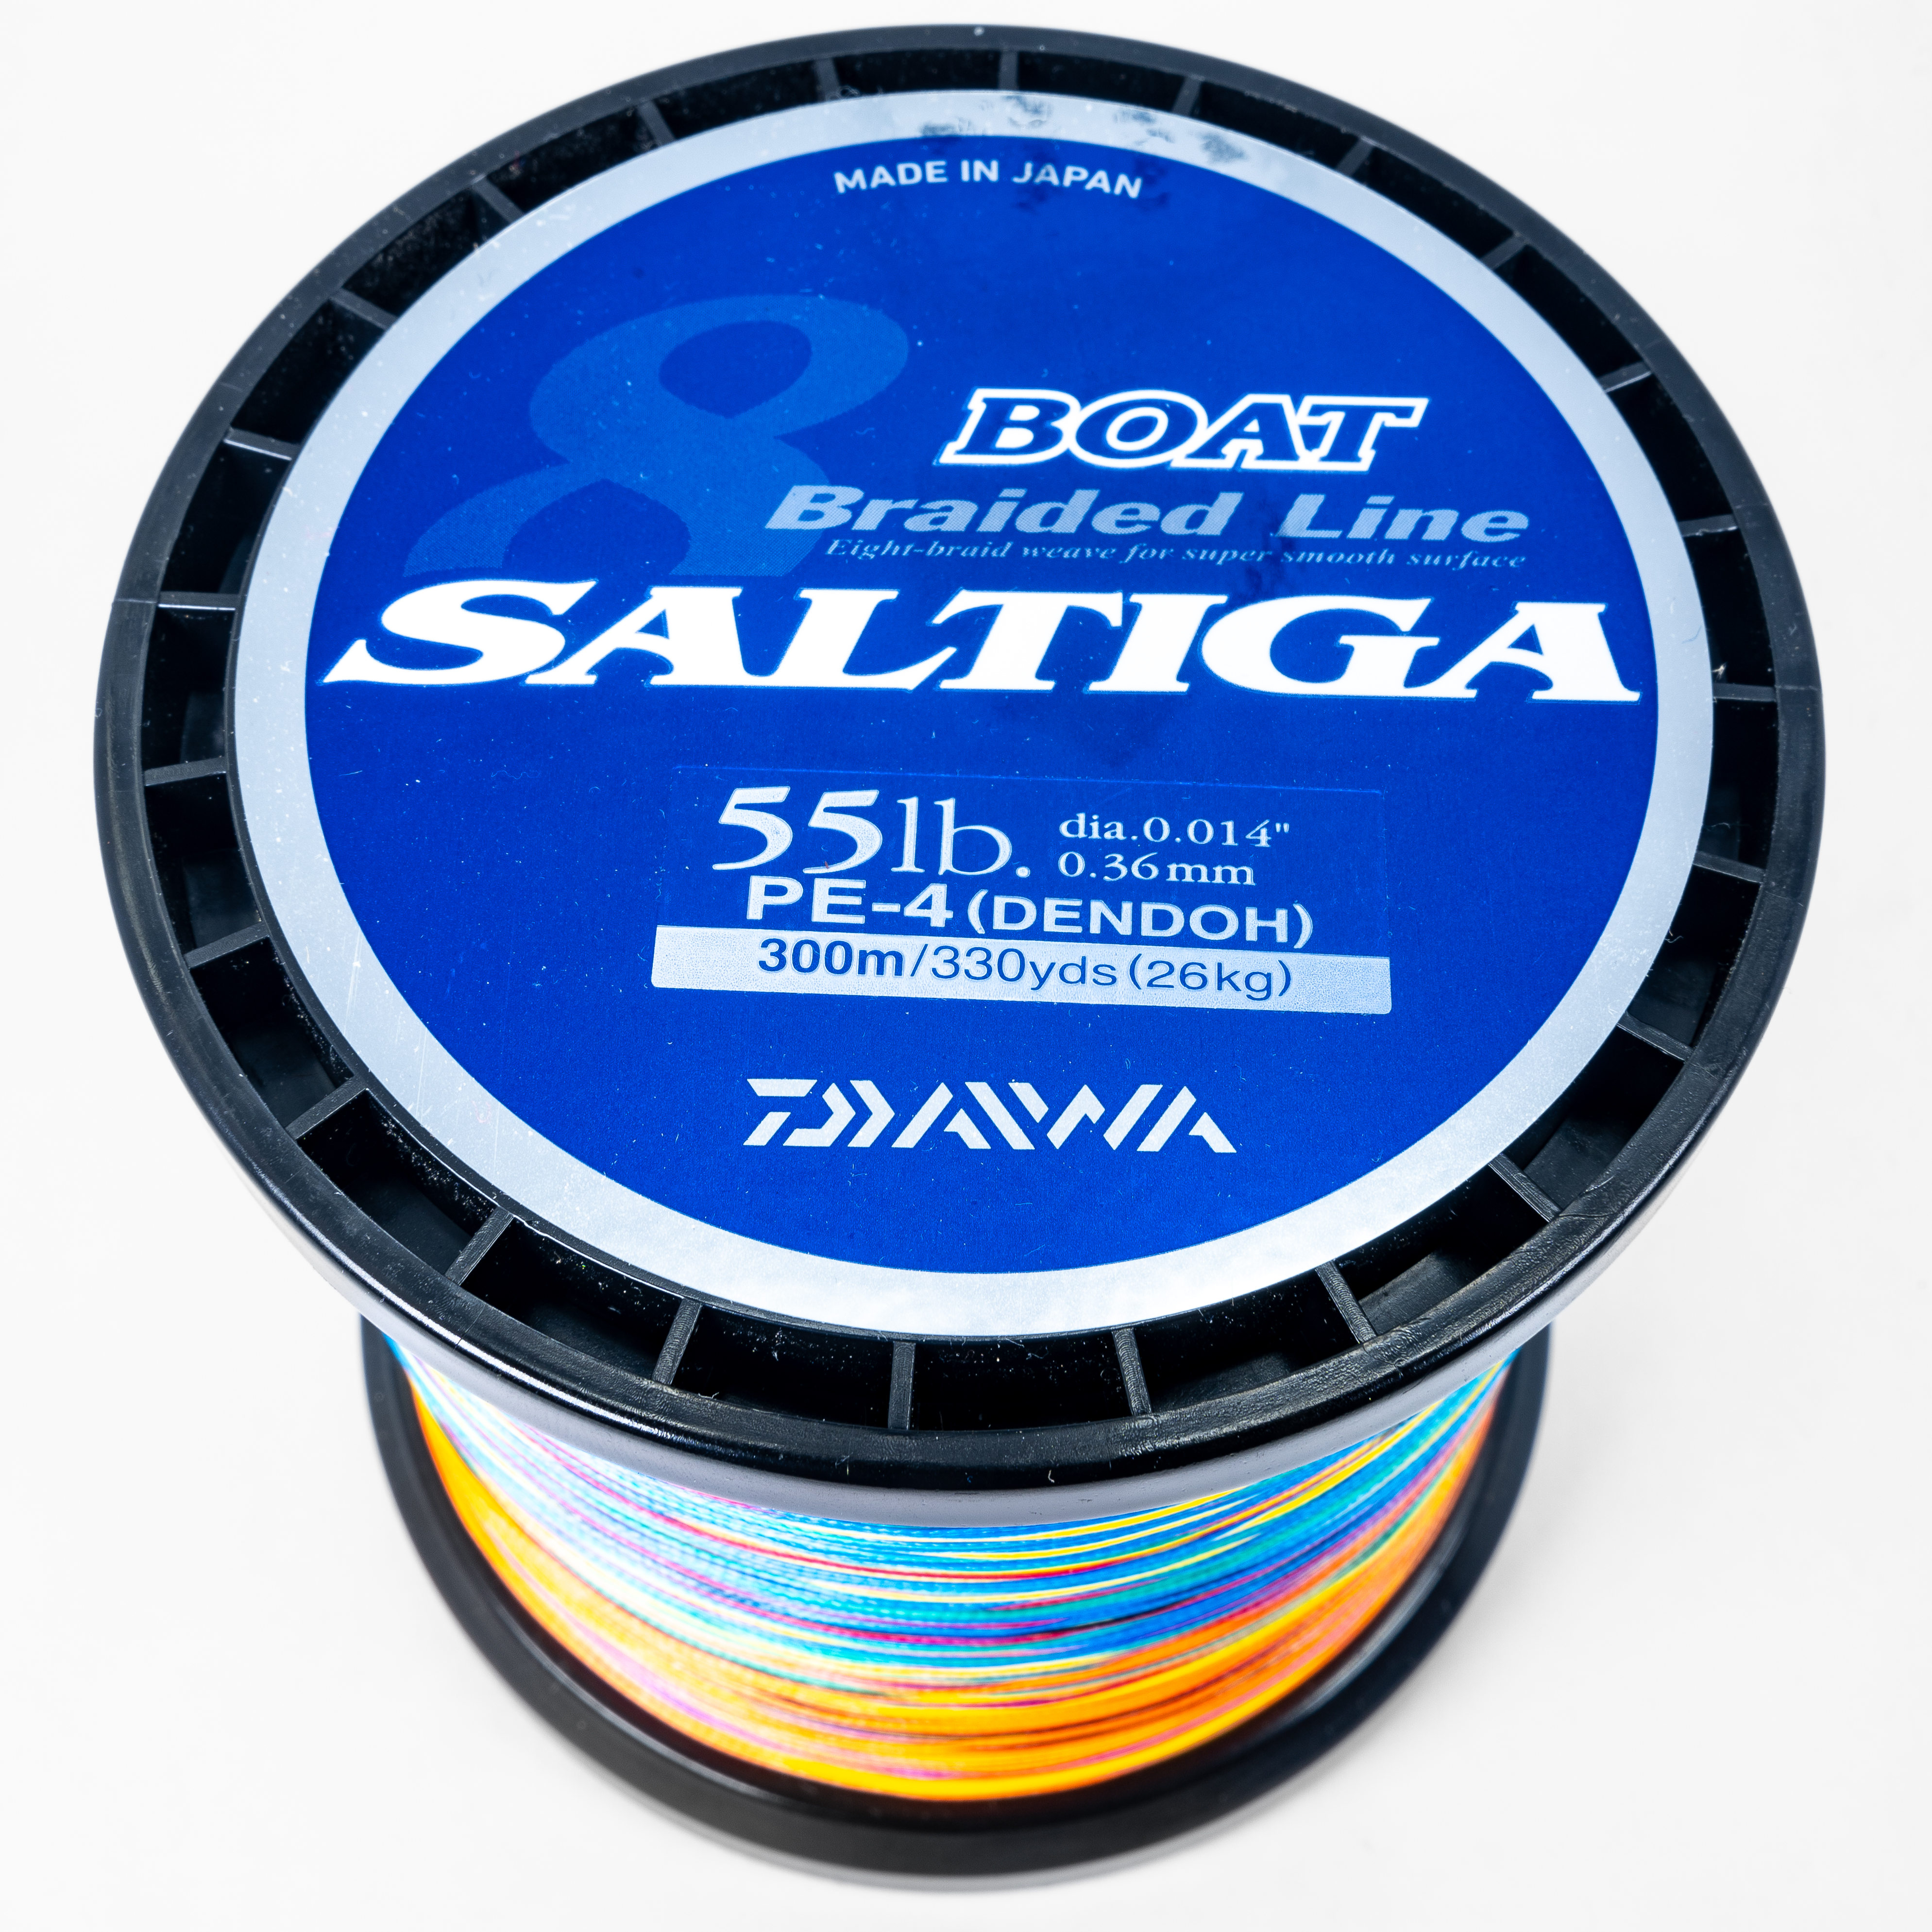 Daiwa Saltiga Boat Braided Saltwater Fishing Line 330-550 Yards Multicolor 